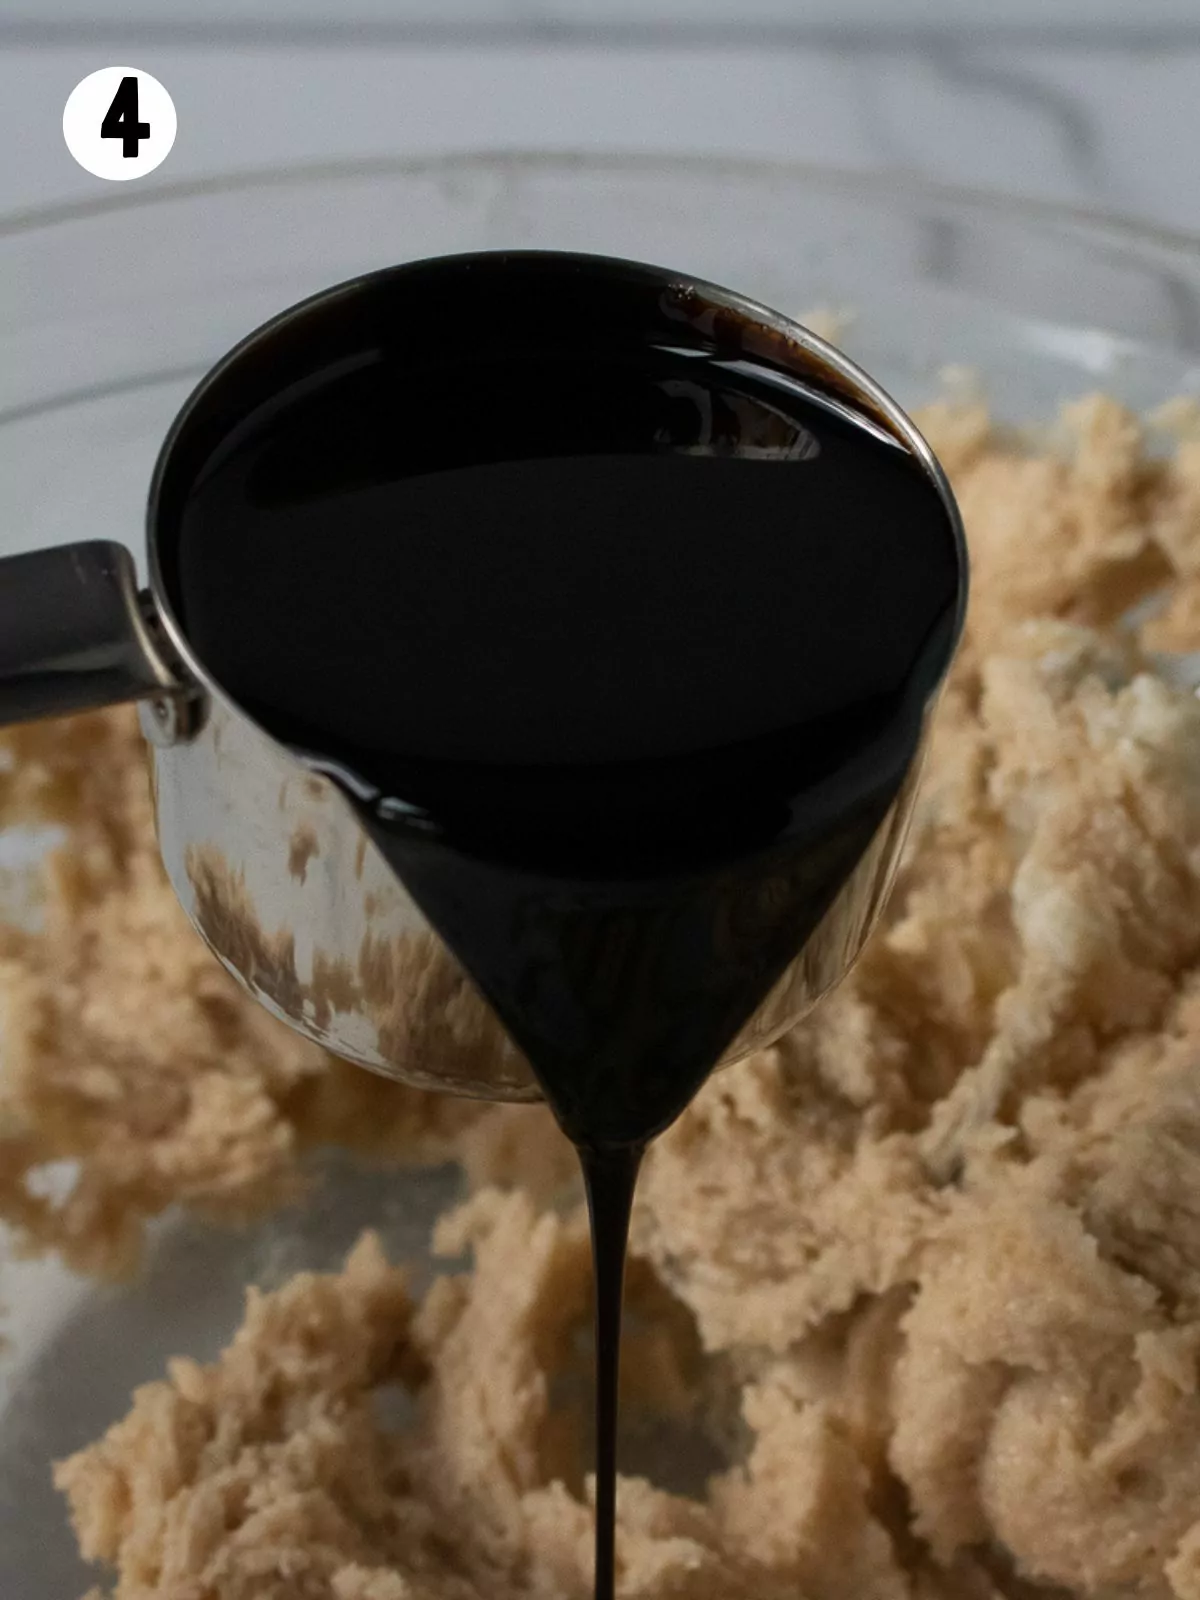 Dark molasses in measuring cup.